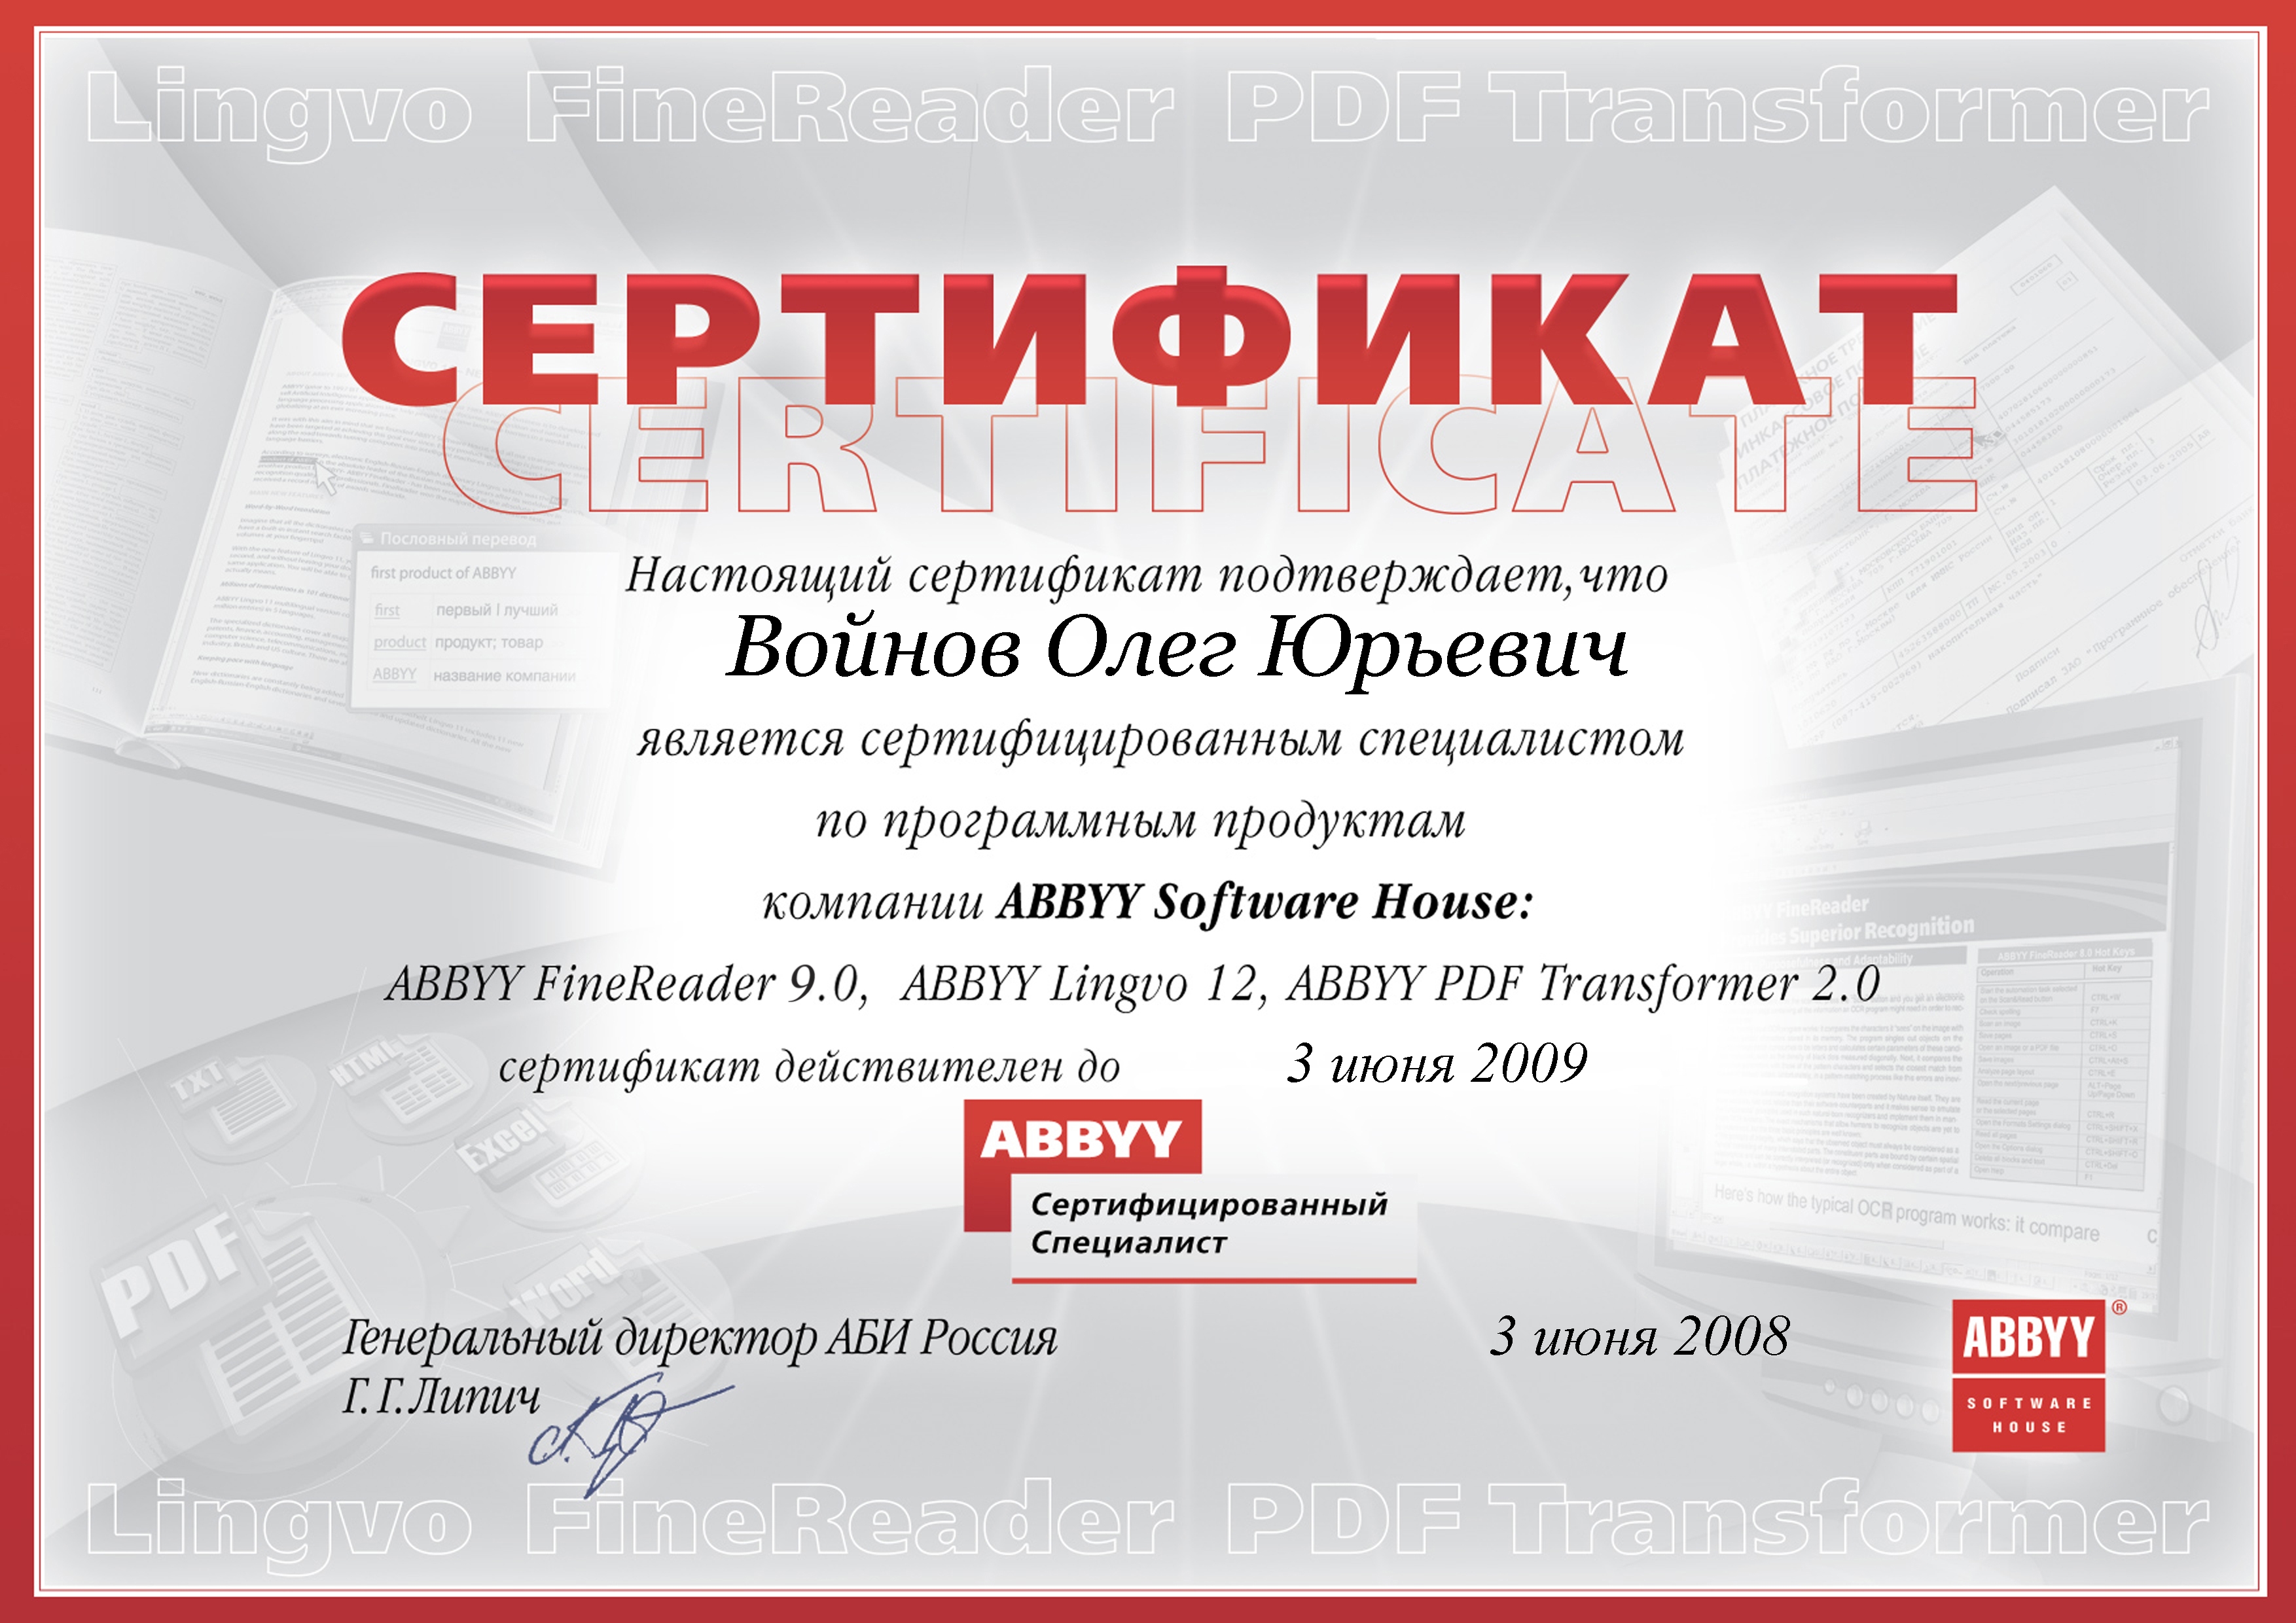 Сертифицированный специалист ABBYY